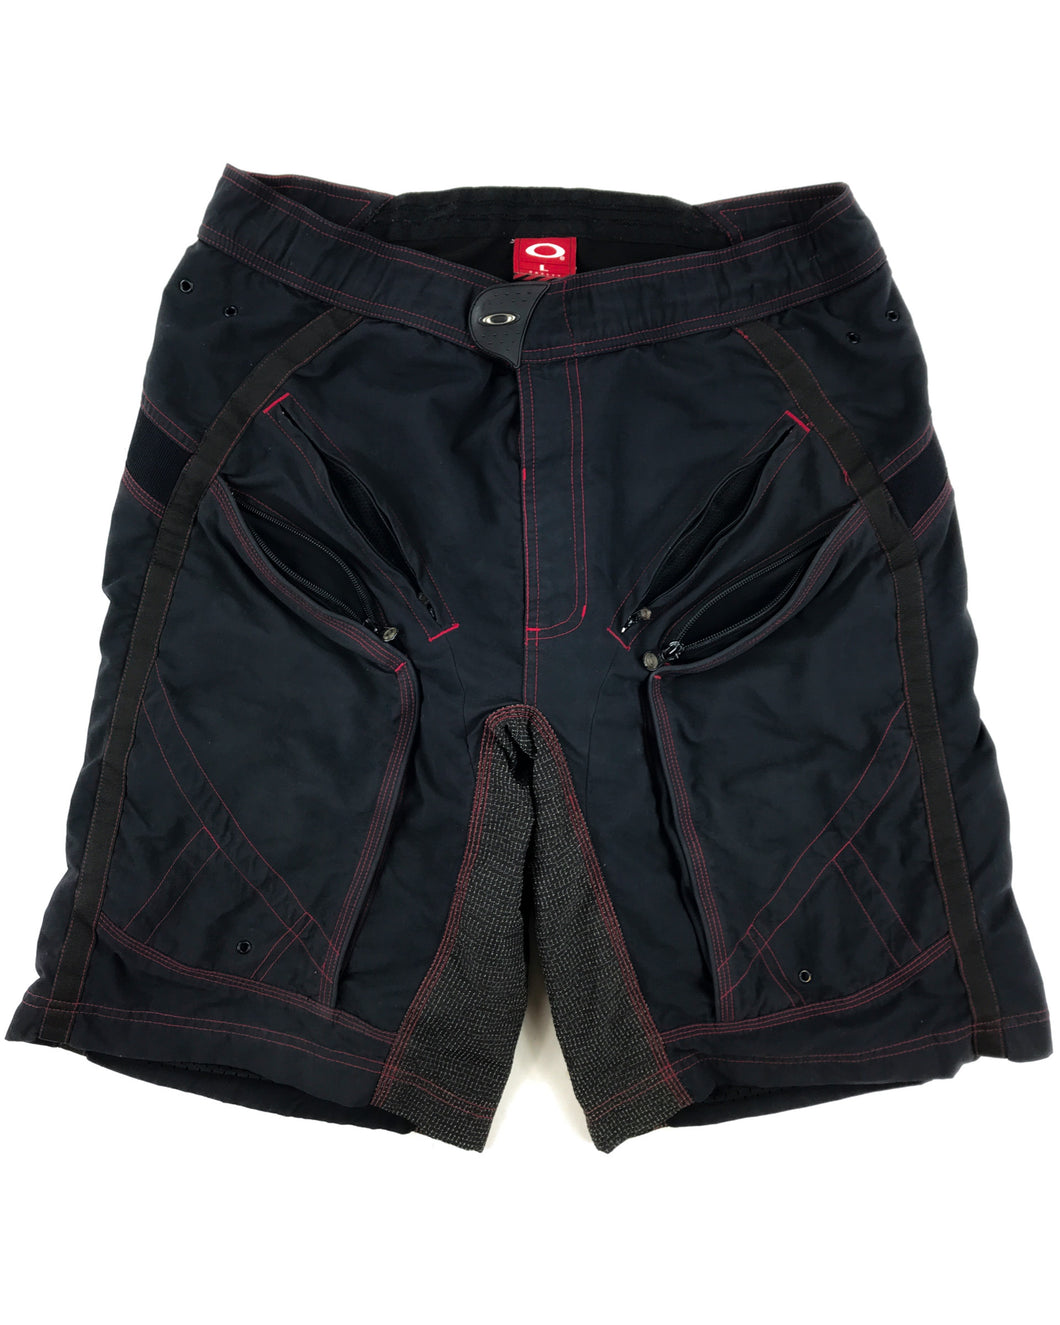 OAKLEY Ventilated Mountain Bike Shorts (Early 2000’s)(31-35)